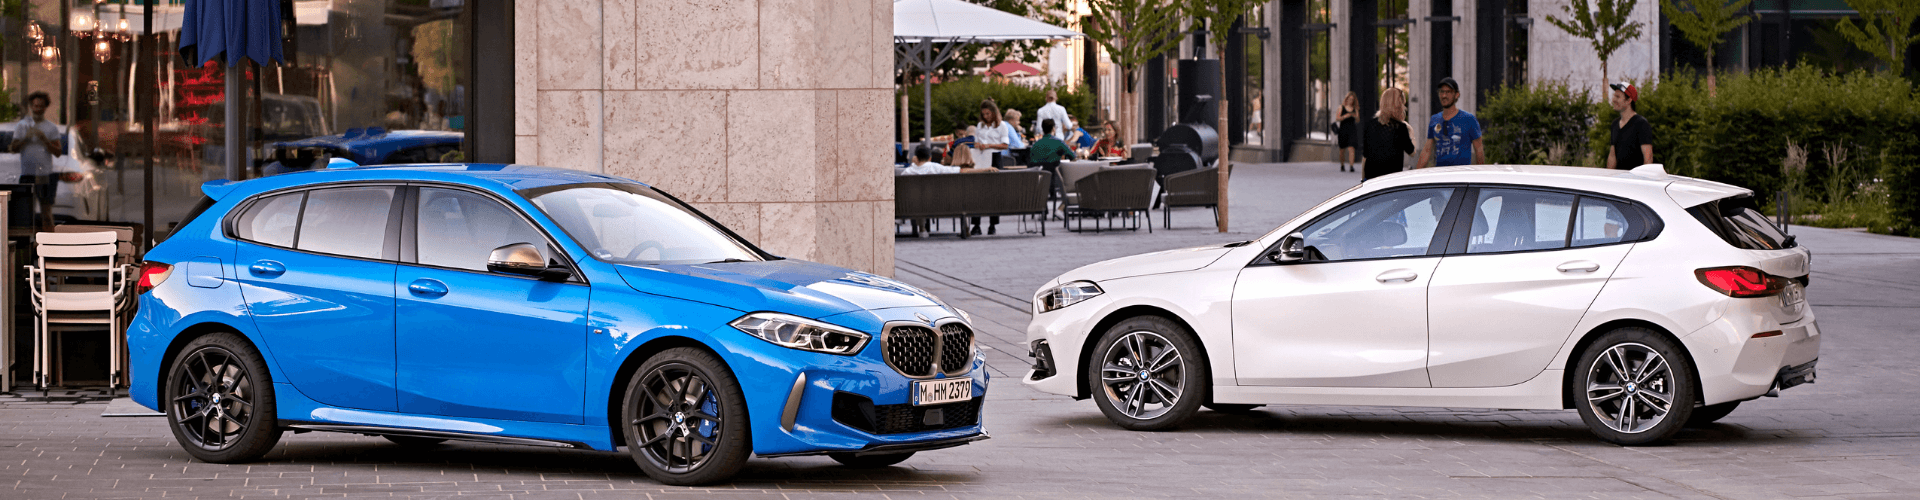 BMW zakelijk leasen bij XLLease